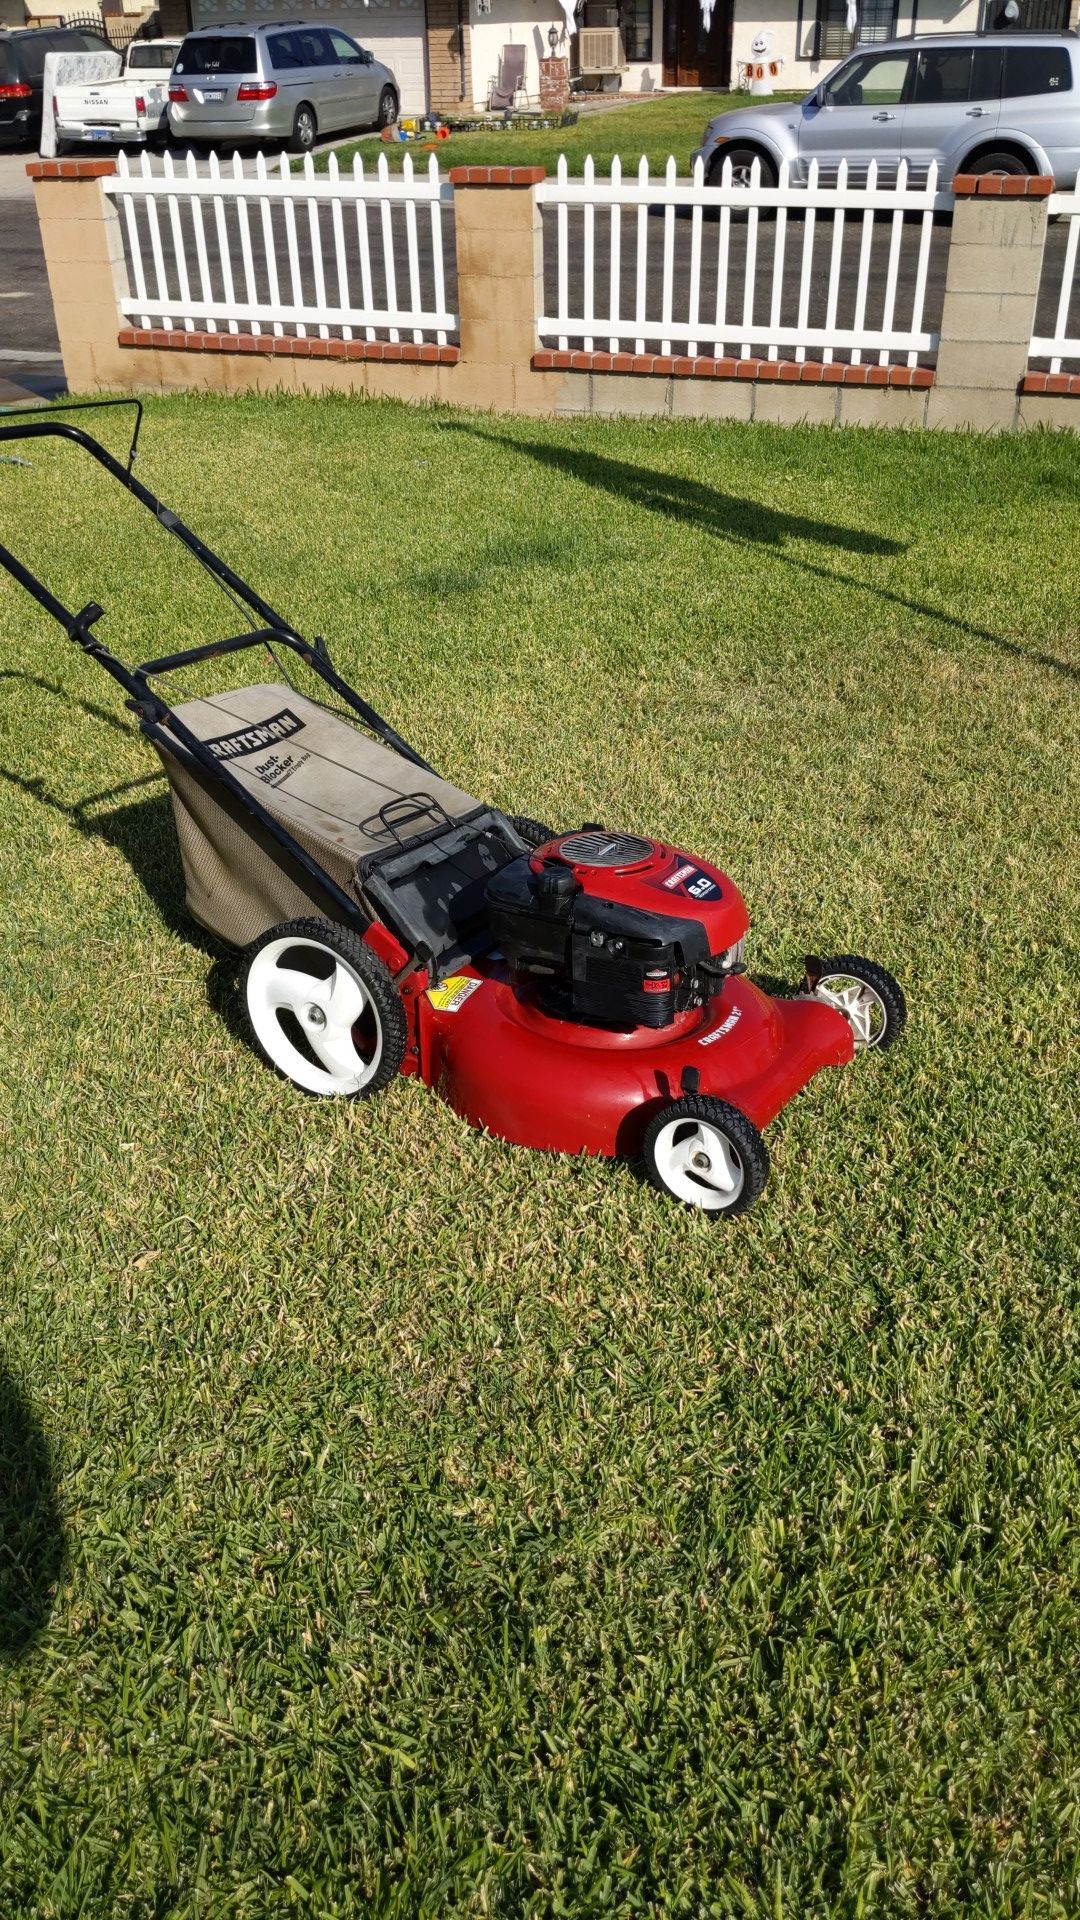 21 inch 6 HP Craftsman Push Lawn mower Runs Good $100 Dollars or best offer